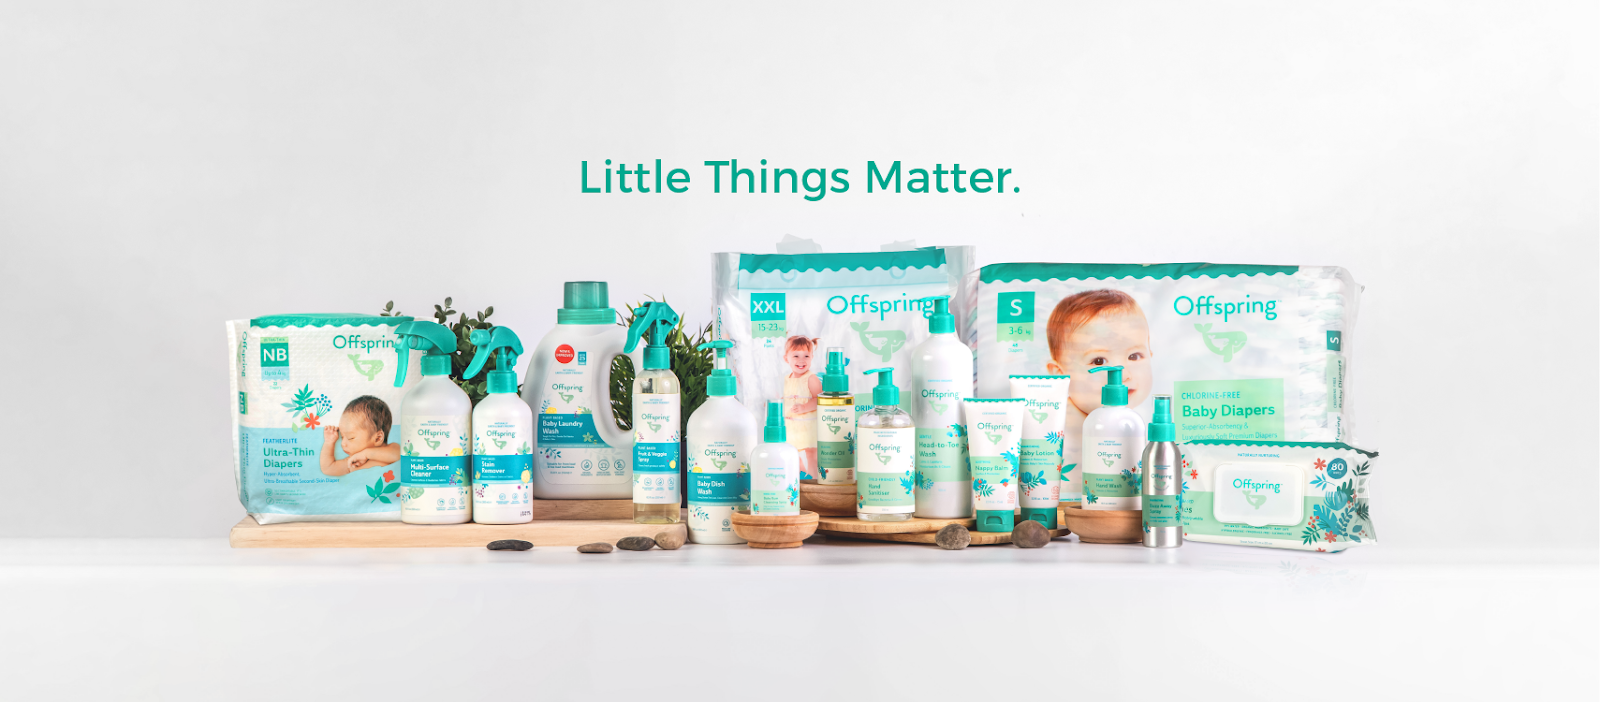 organic baby products Malaysia